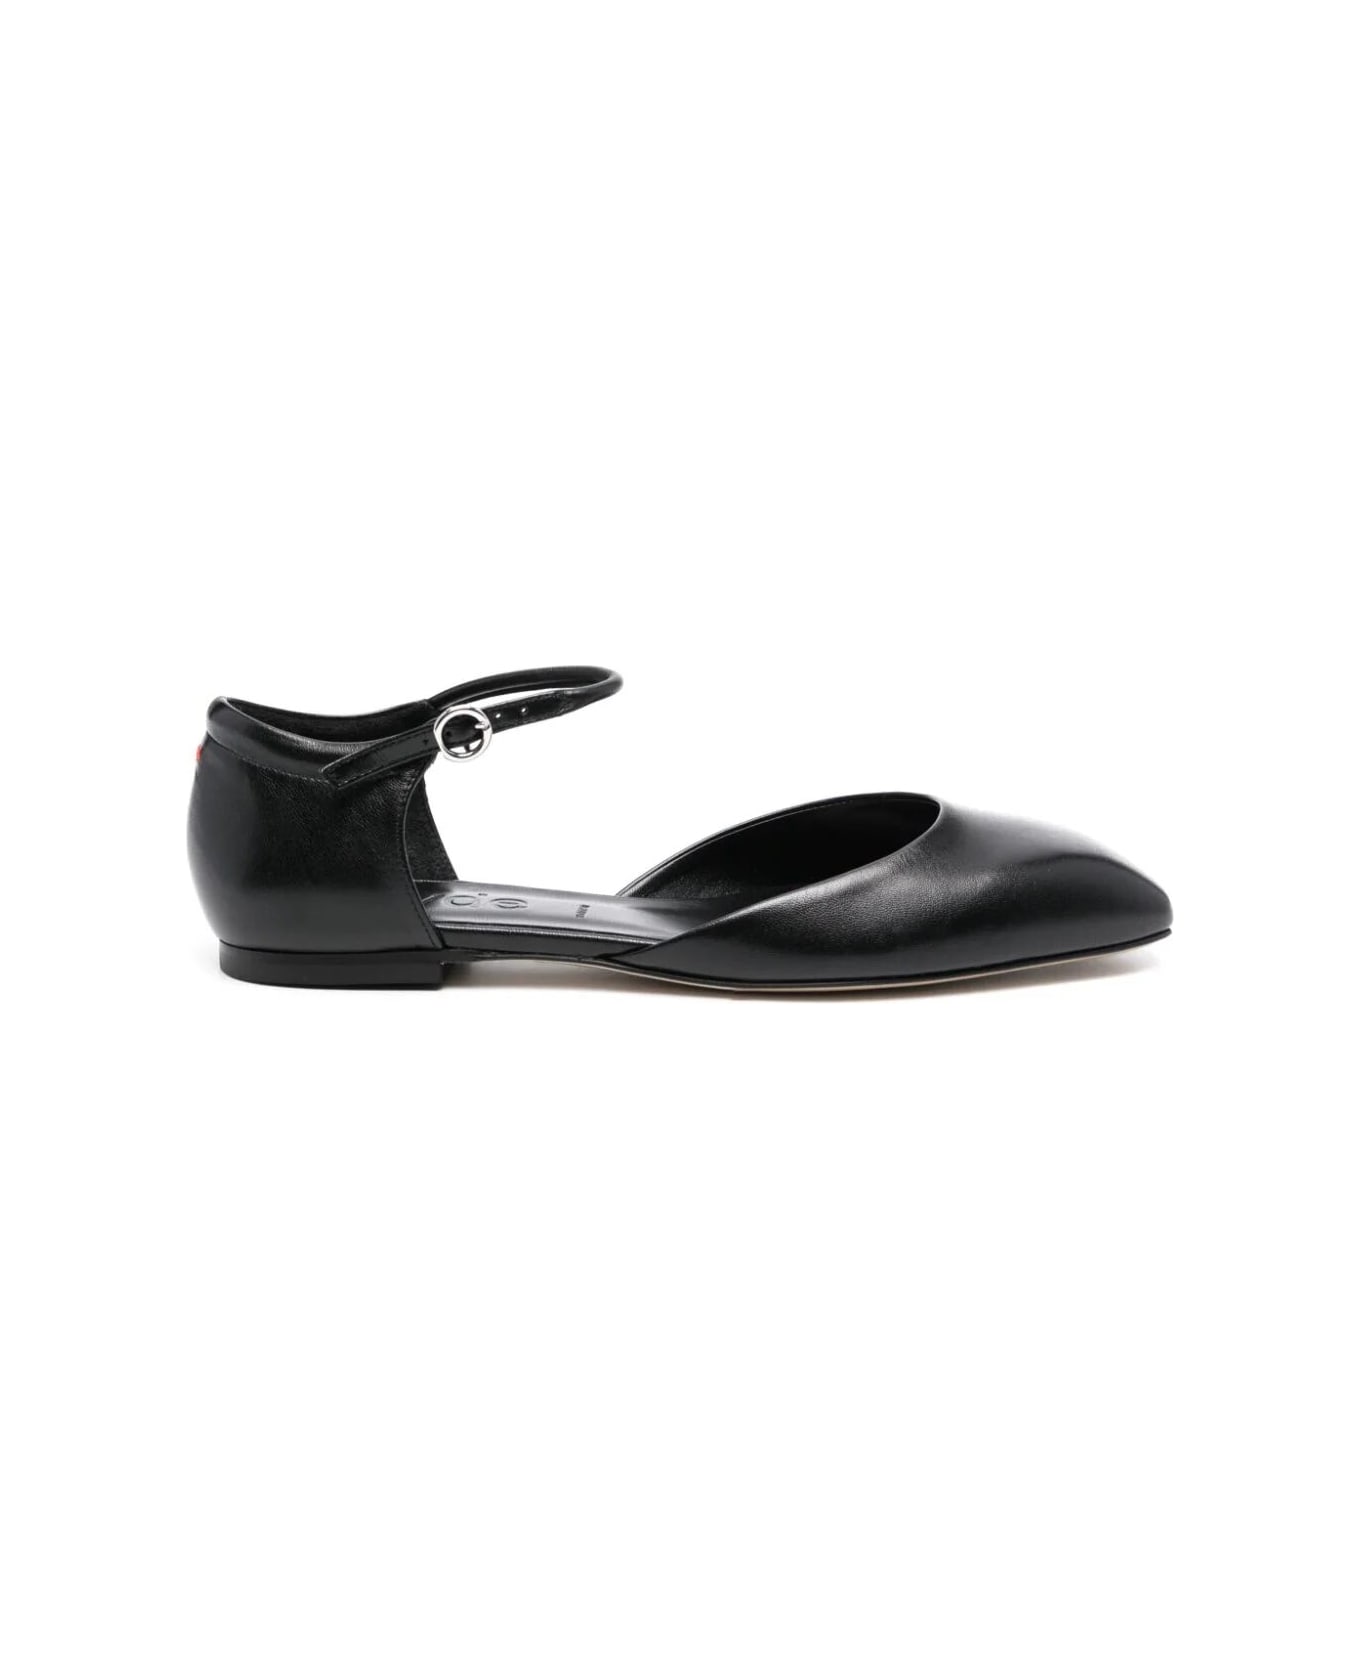 aeyde Miri Nappa Leather Black Shoes - Black フラットシューズ